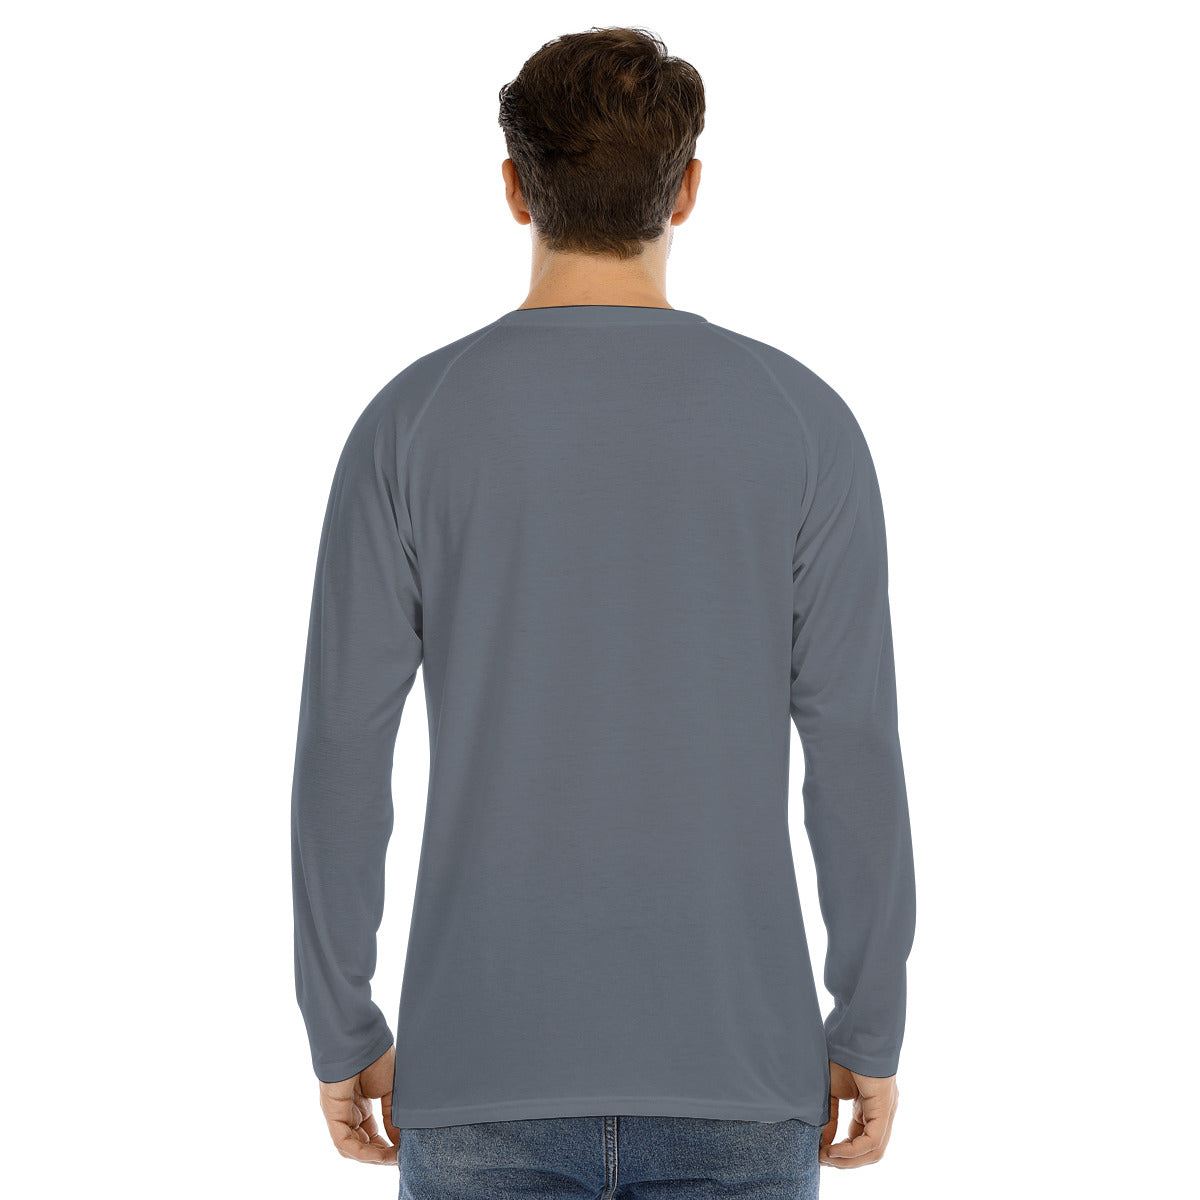 Camino Real 104 -- Men's Long Sleeve T-shirt With Raglan Sleeve